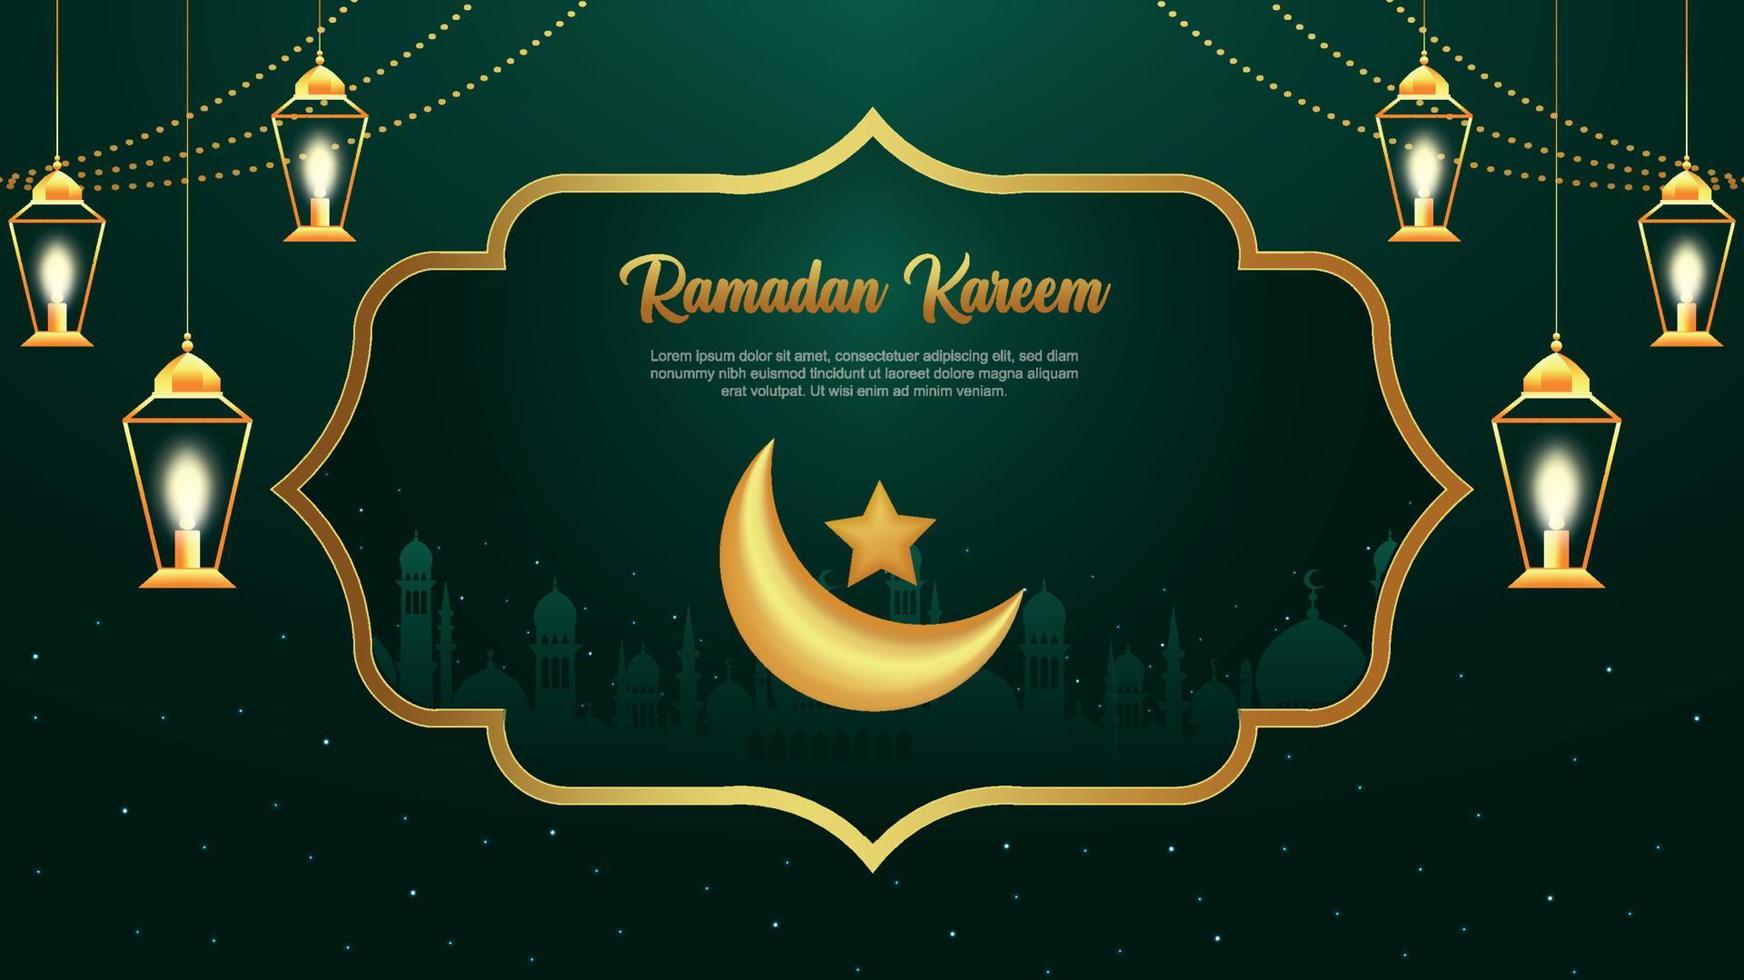 Ramadan kareem saluto carta design con islamico sfondo vettore